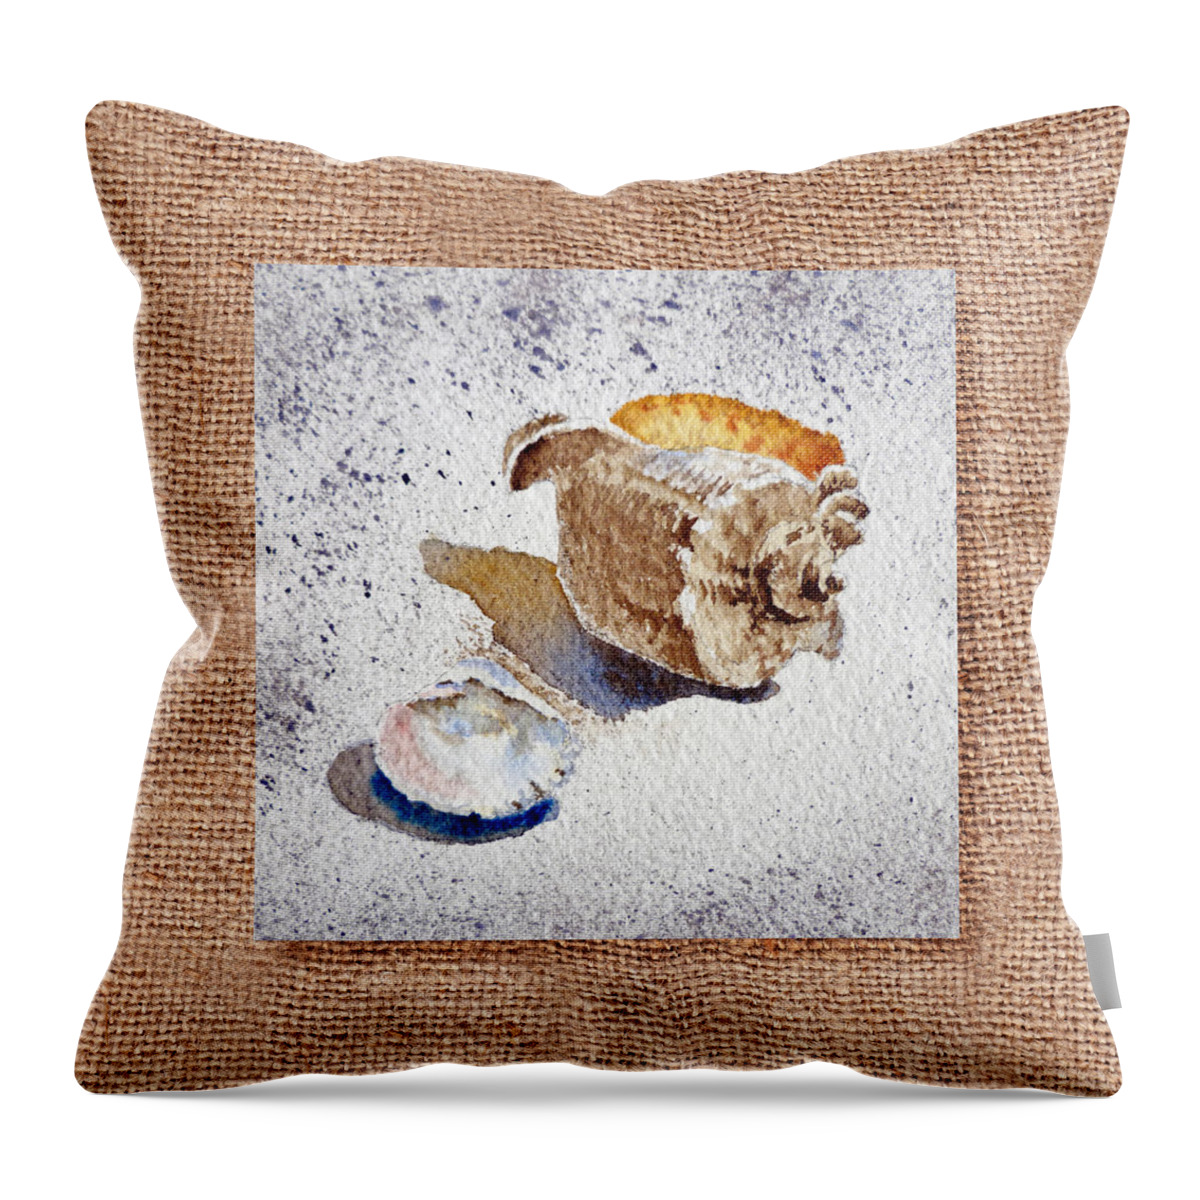 Seashell Throw Pillow featuring the painting She Sells Sea Shells Decorative Collage by Irina Sztukowski